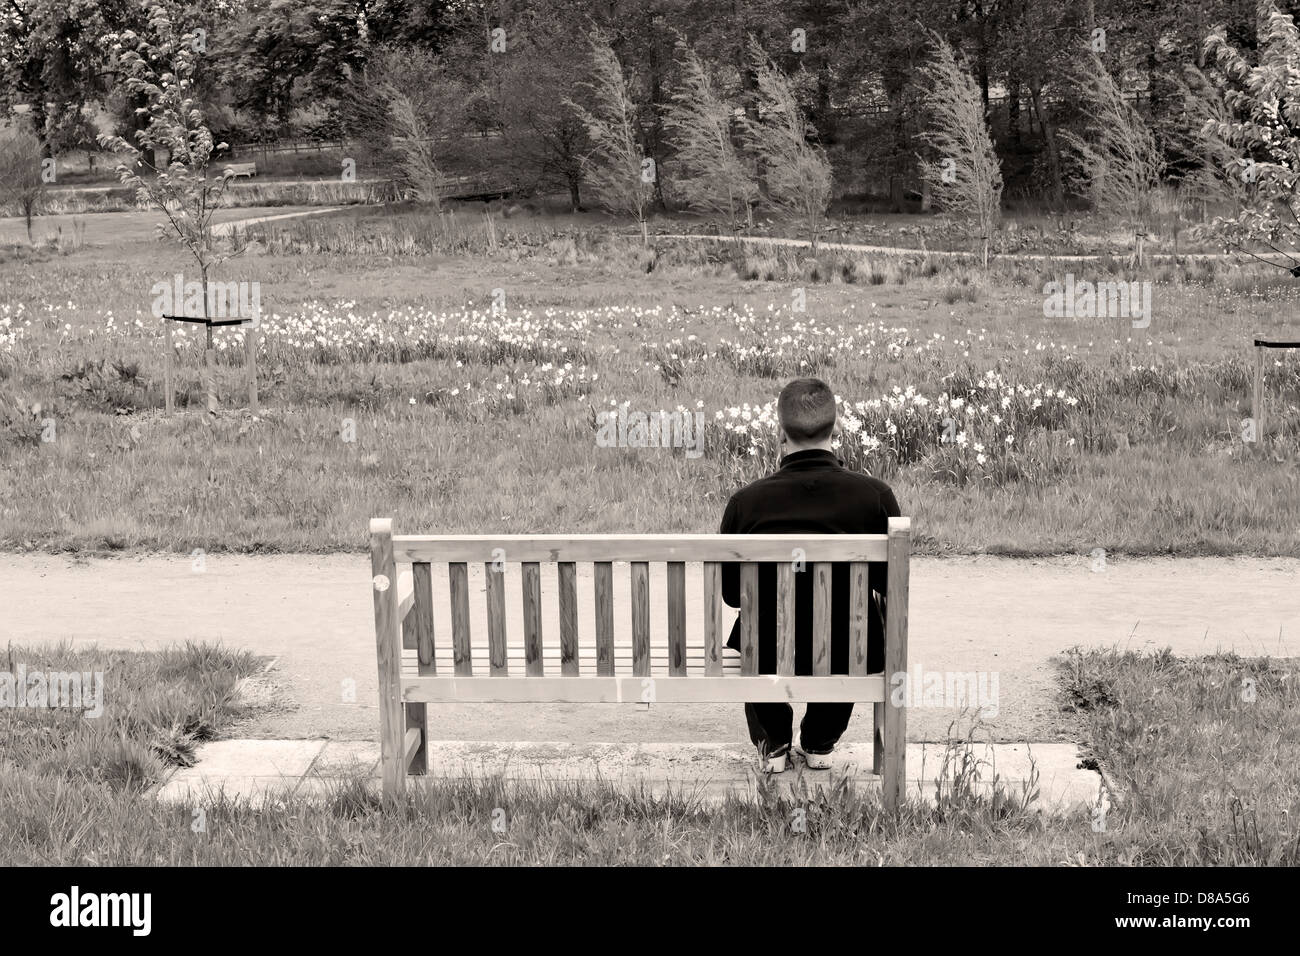 Uomo seduto su una panchina di una scena di campagna Foto Stock